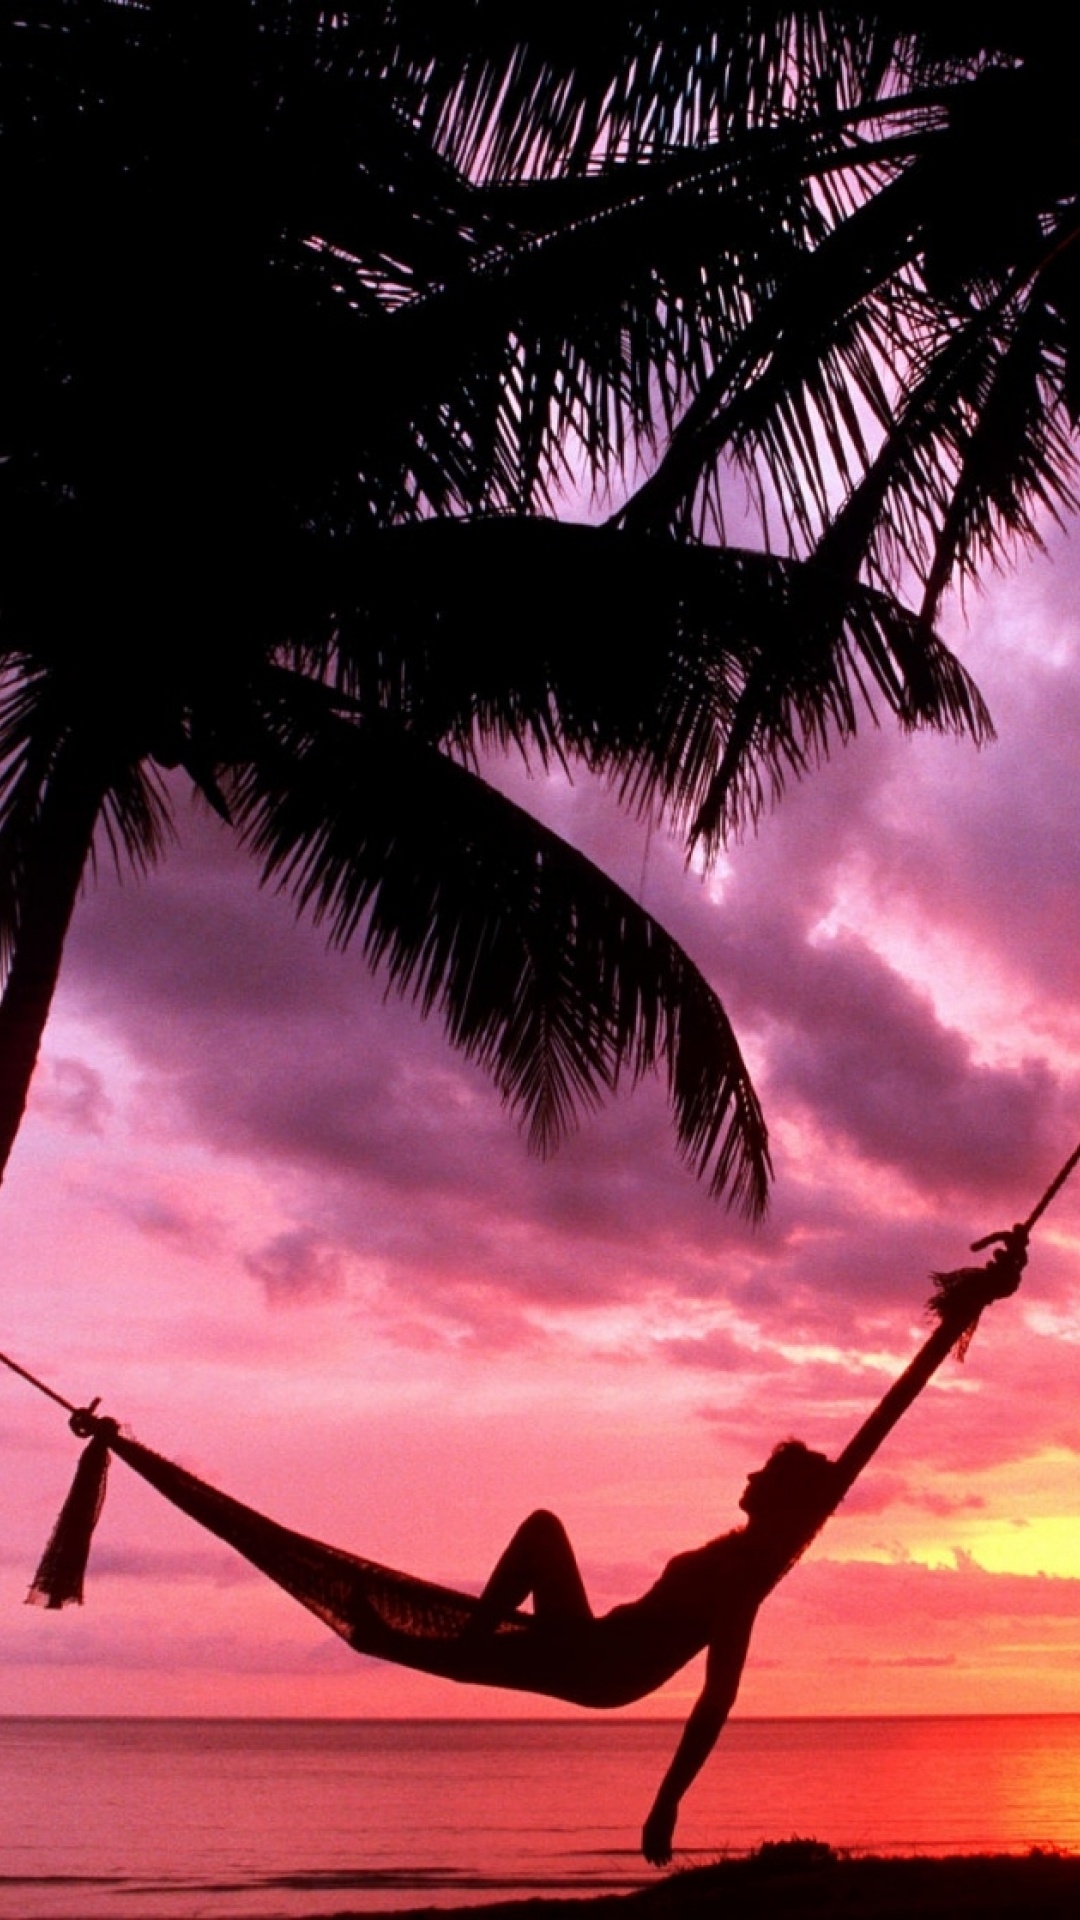 Sunset Beach Hammock Chillout Galaxy S4 Wallpaper